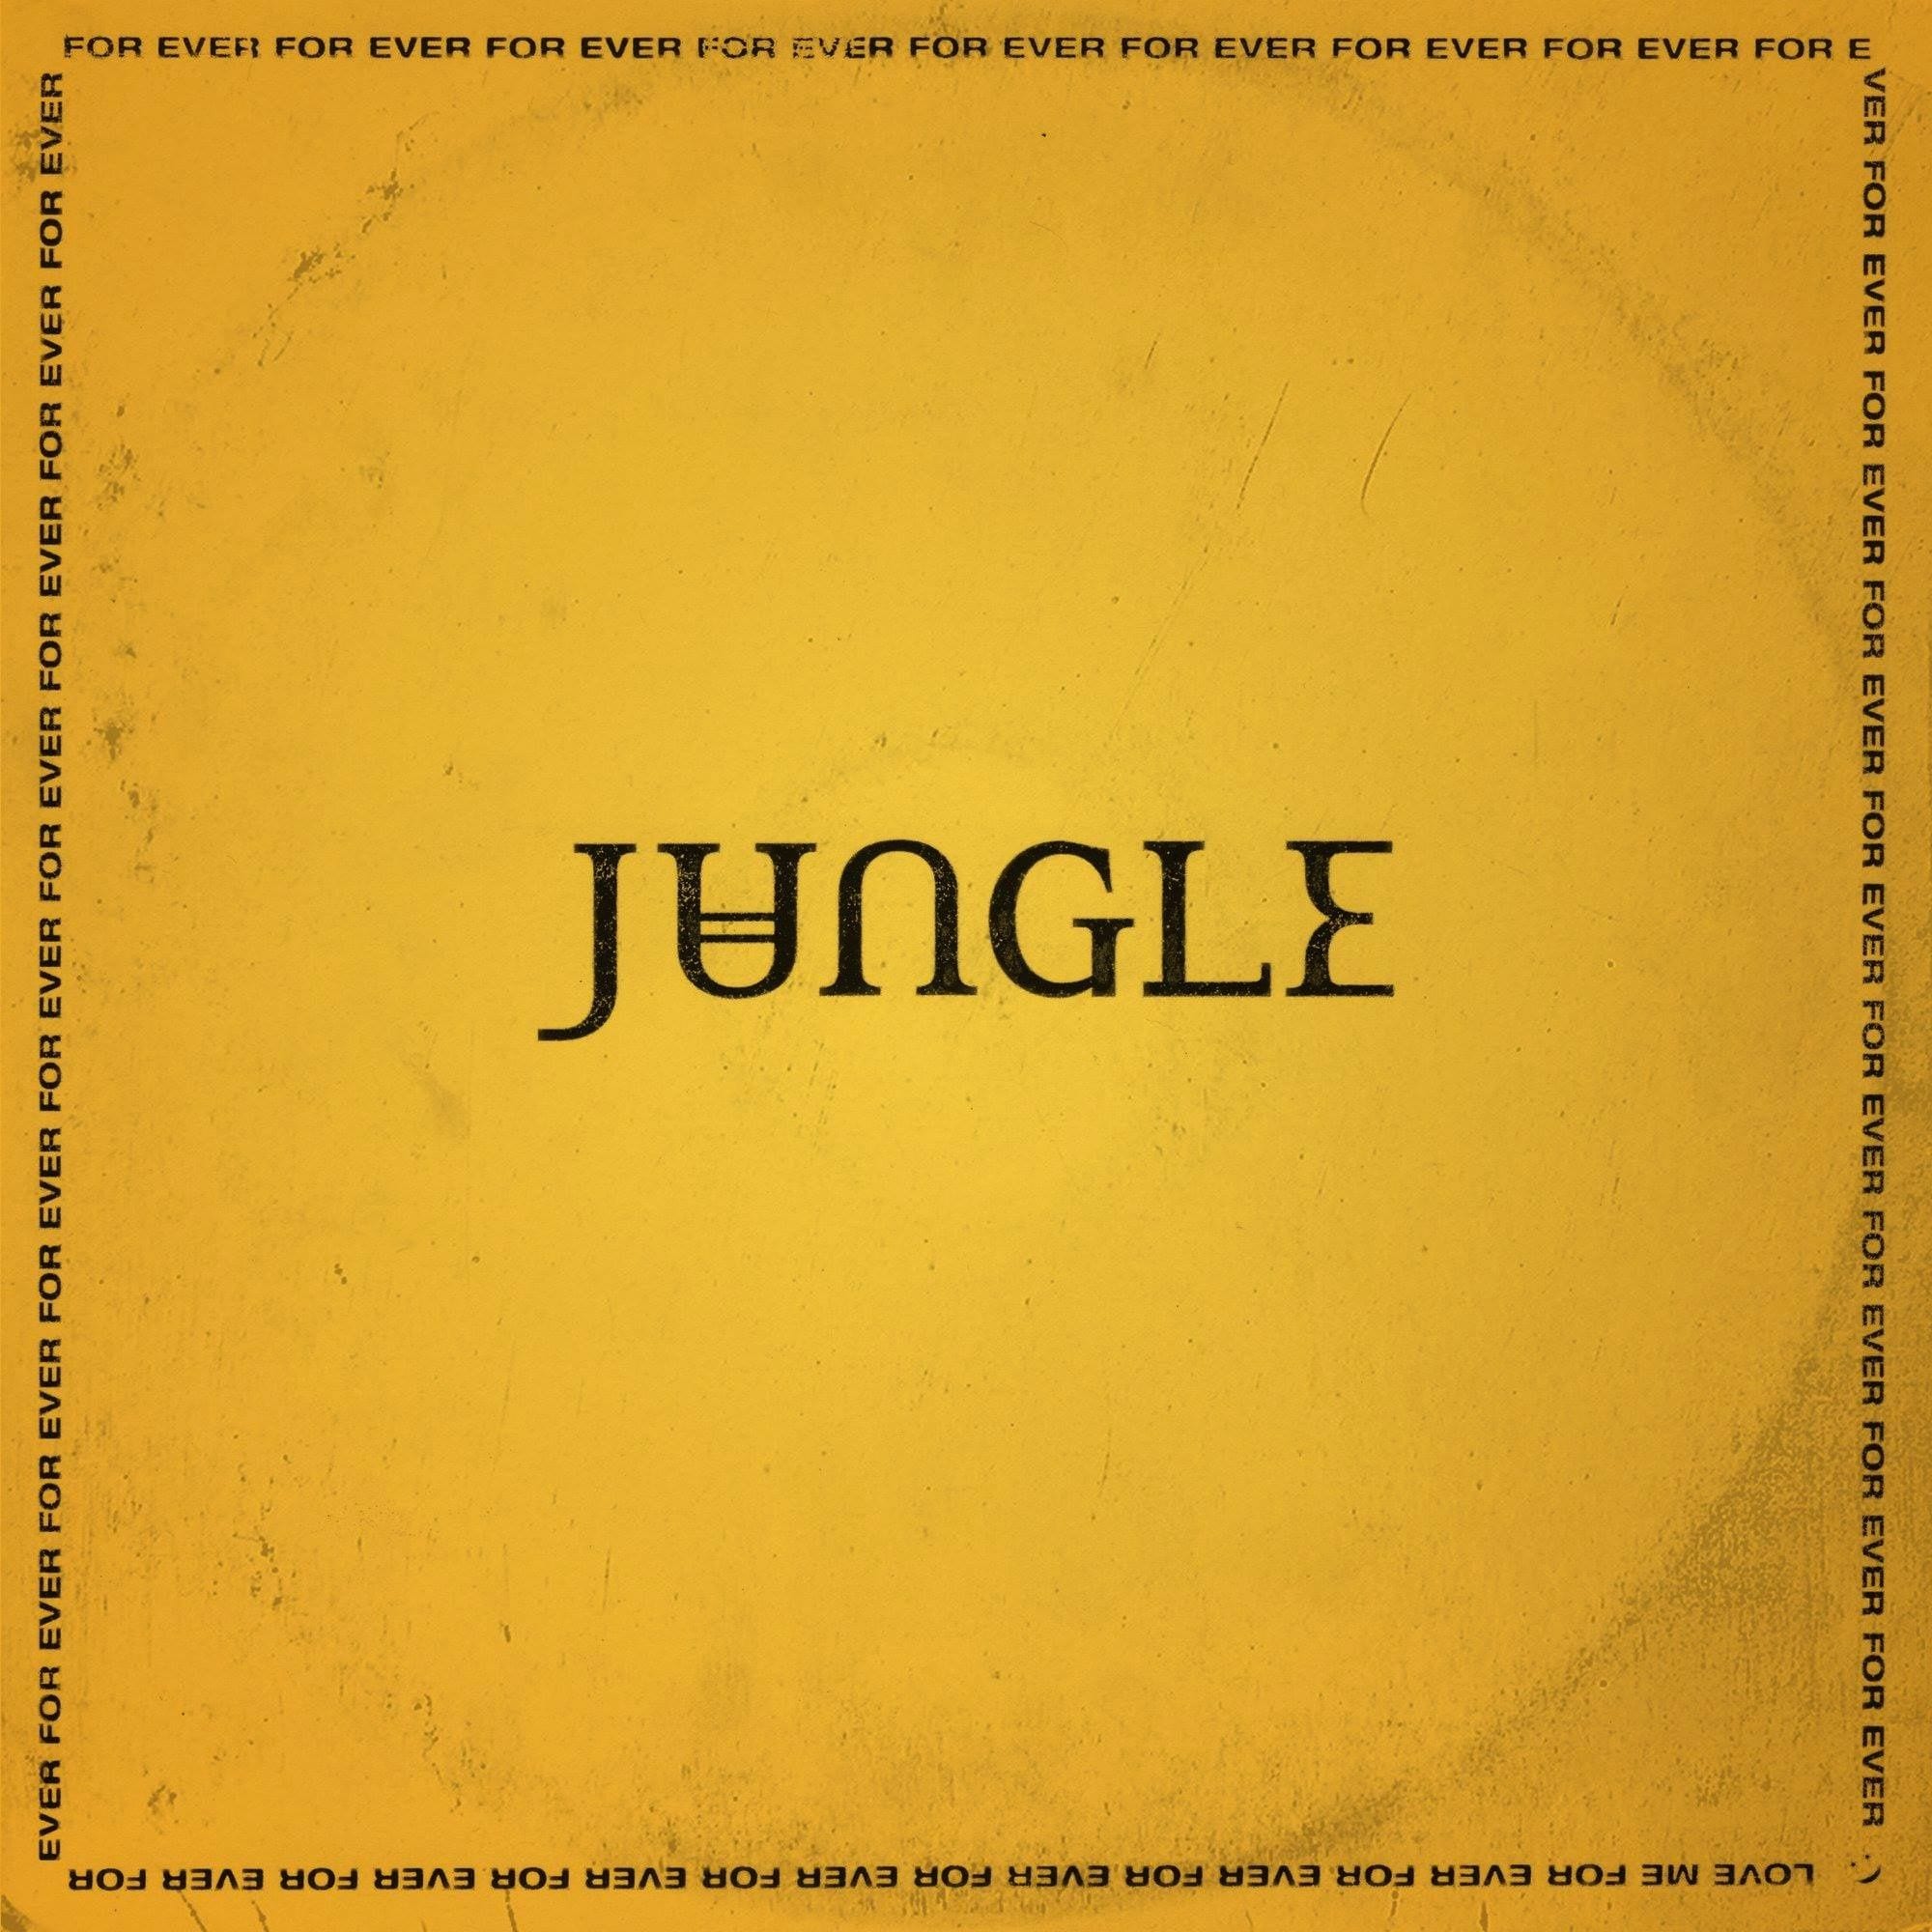 Jungle – “Heavy, California” / “Cherry”